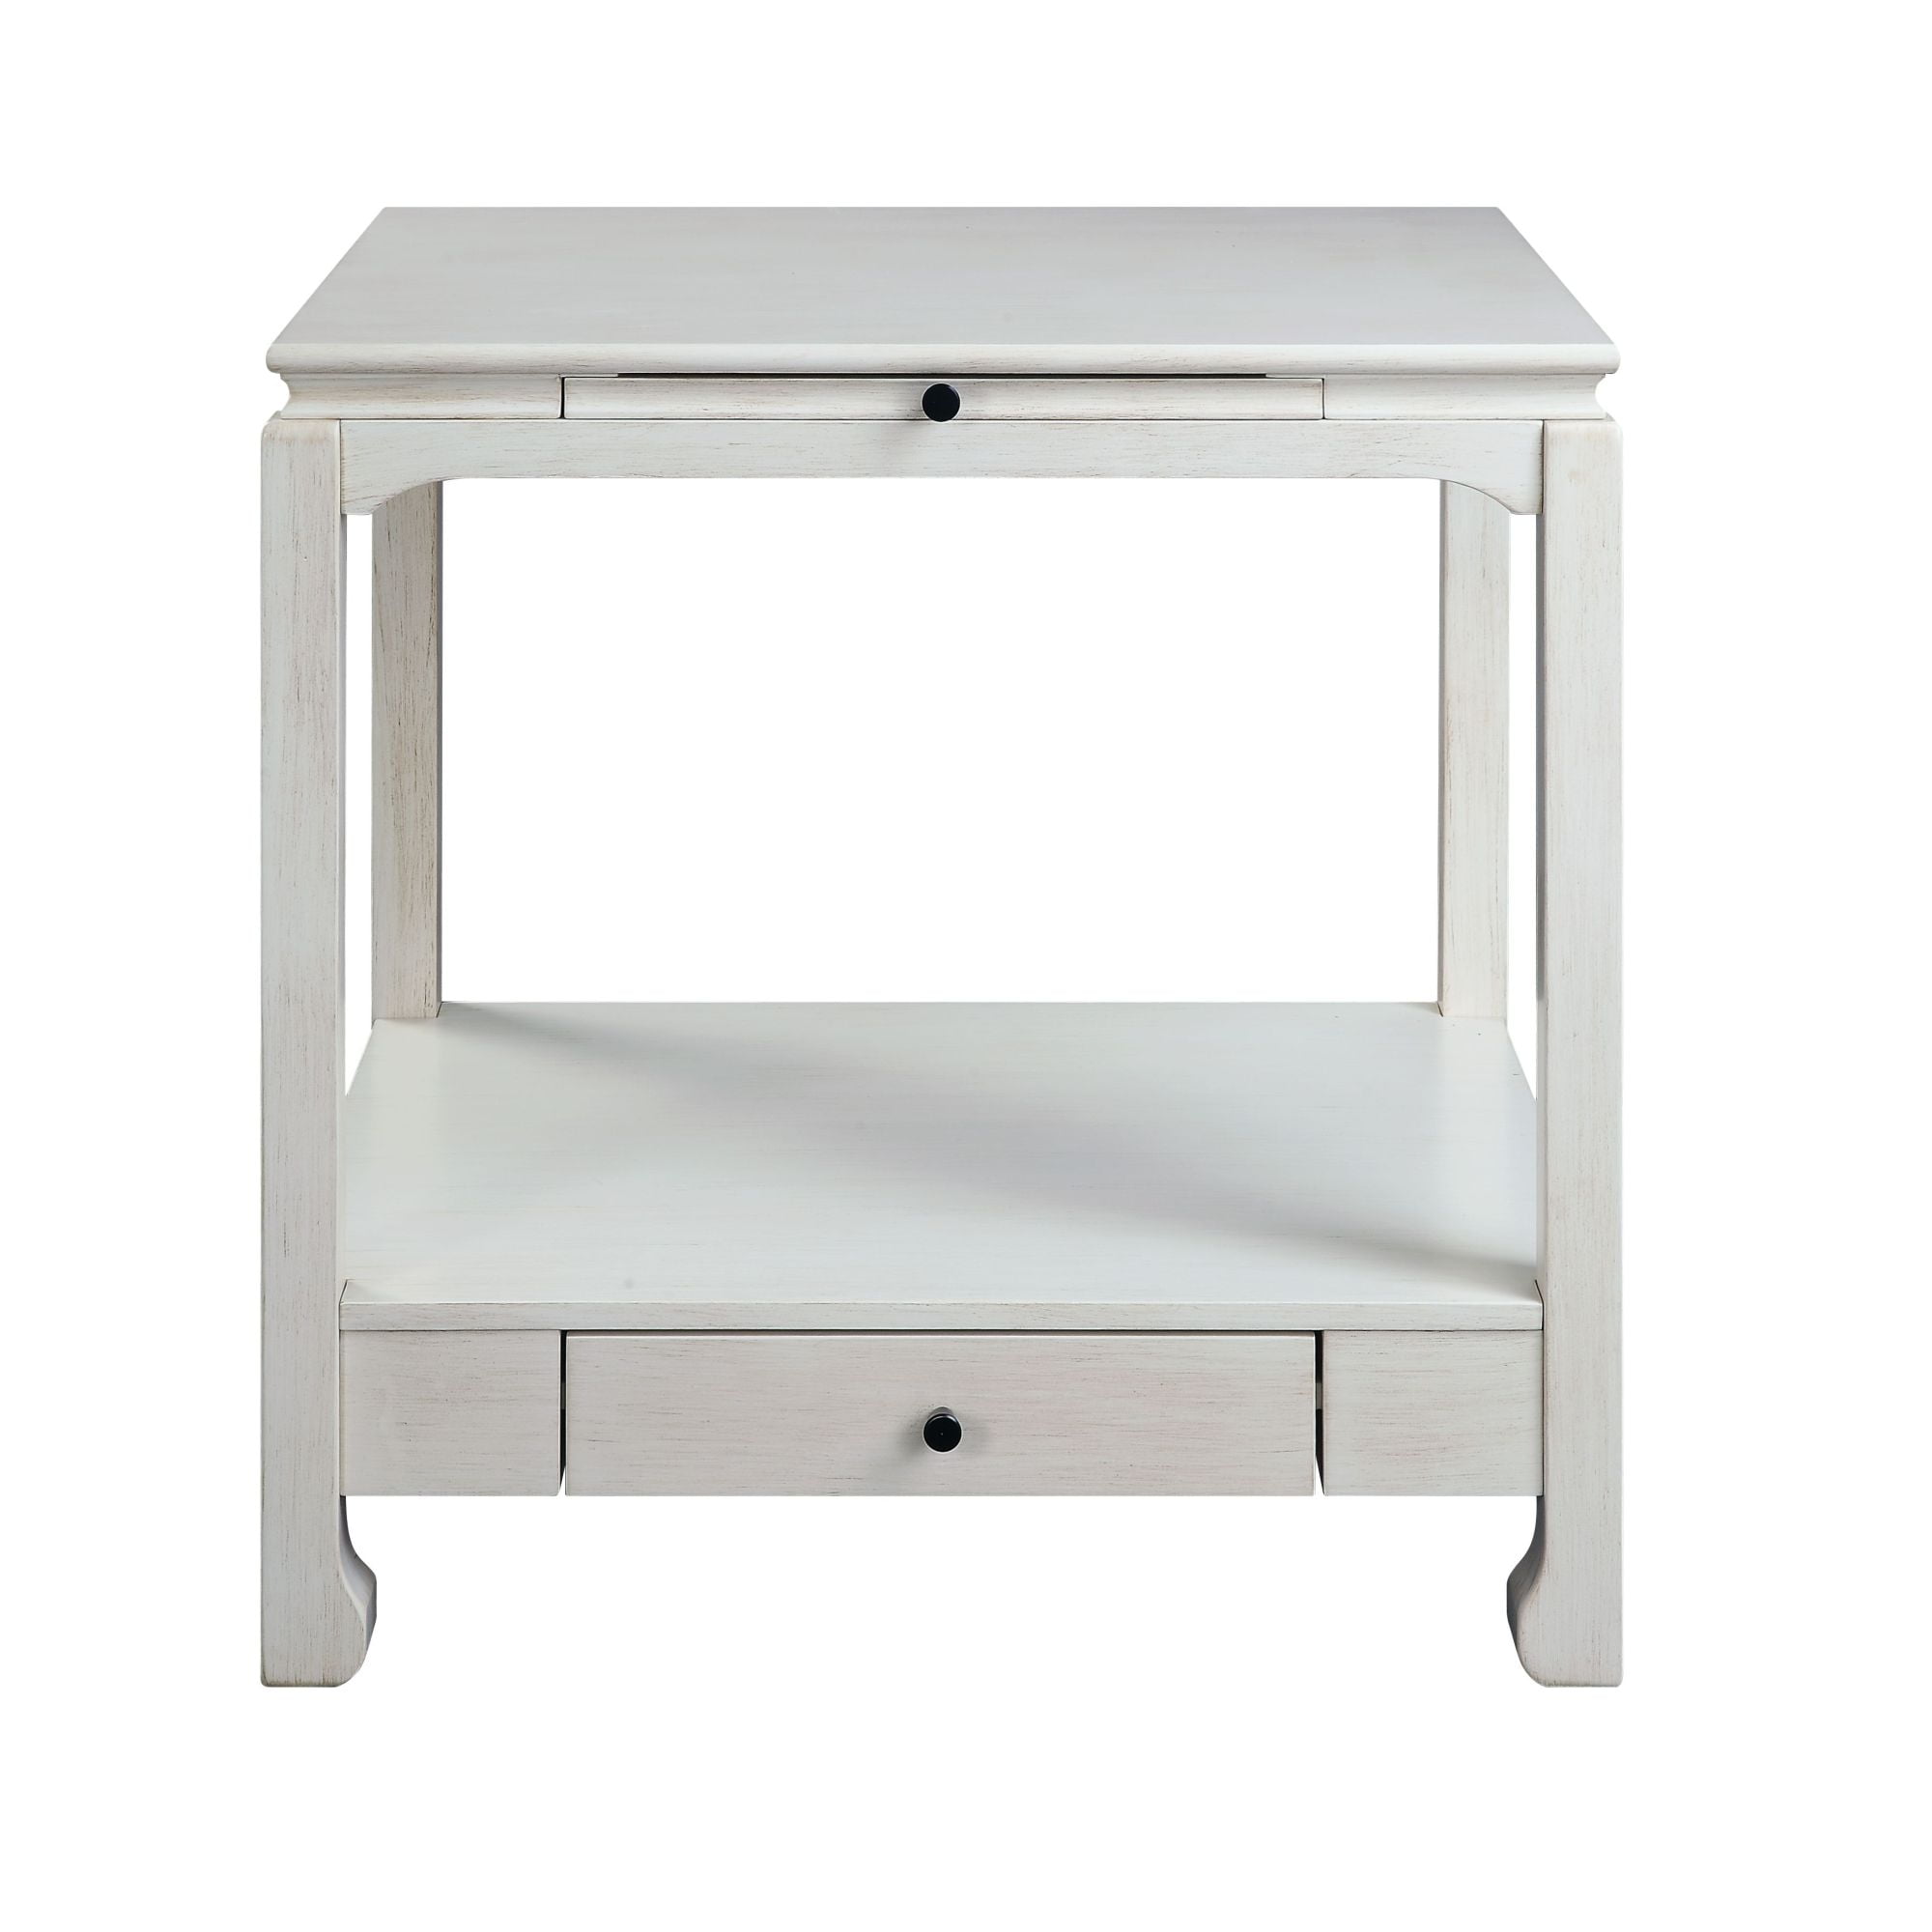 Miekor Furniture Seatlas Accent Table, Antique White Finish